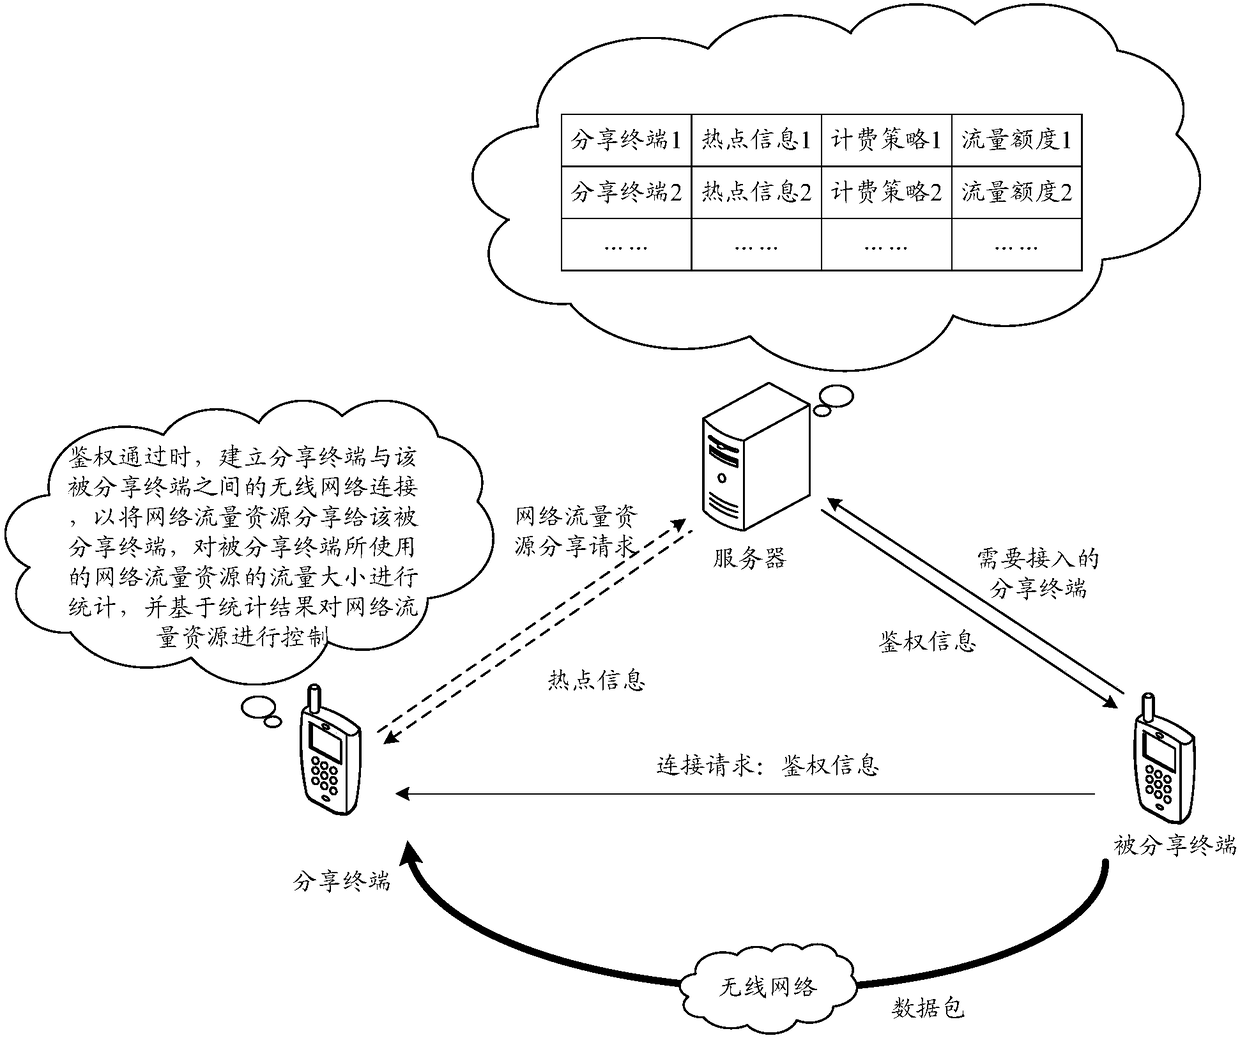 Network traffic resource sharing method, device, system and storage medium